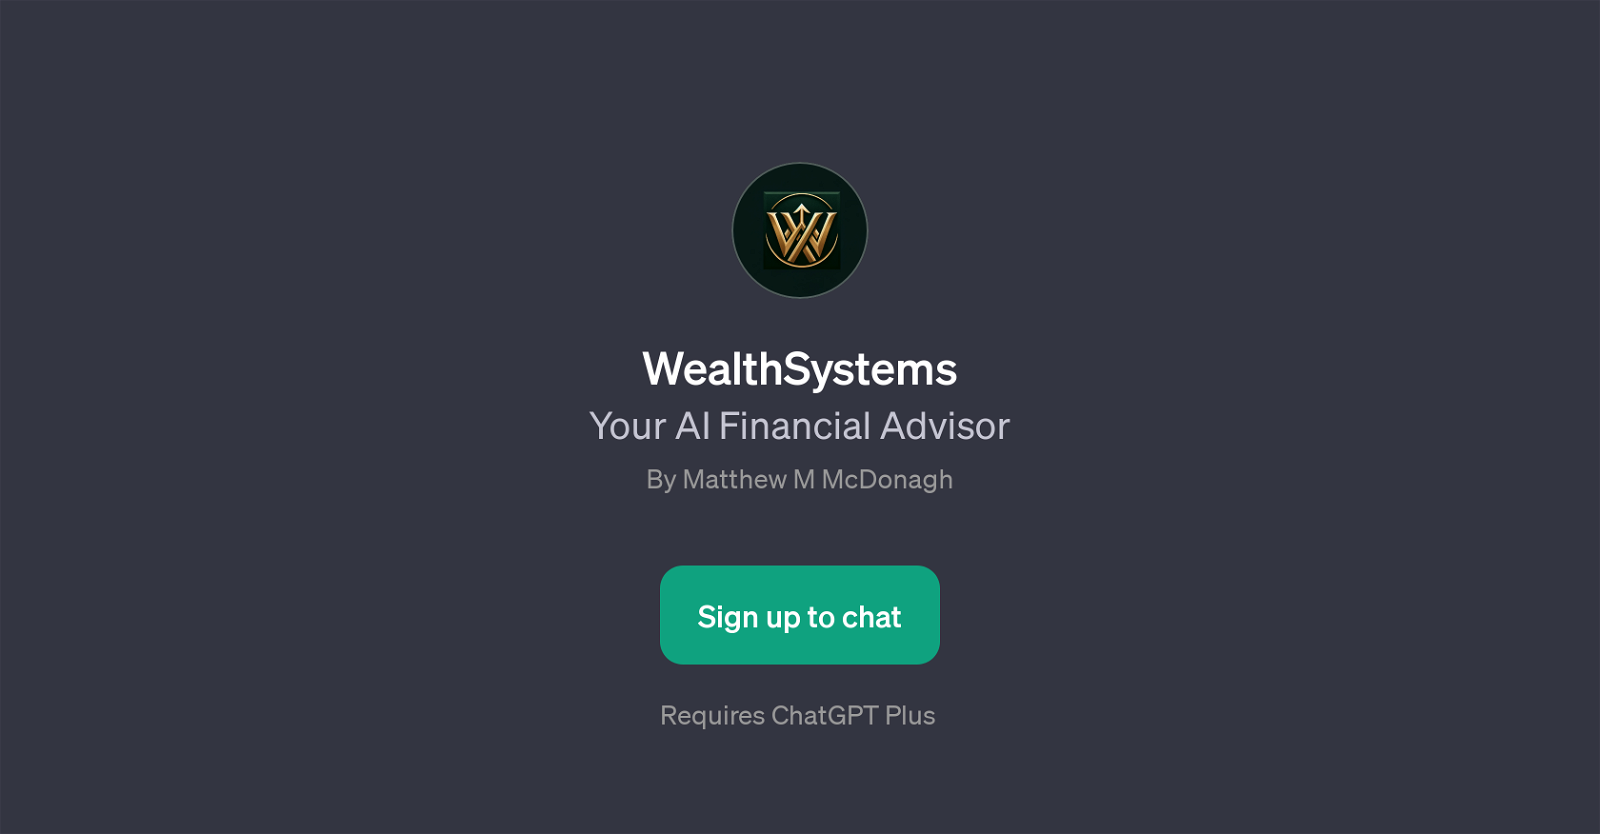 WealthSystems website